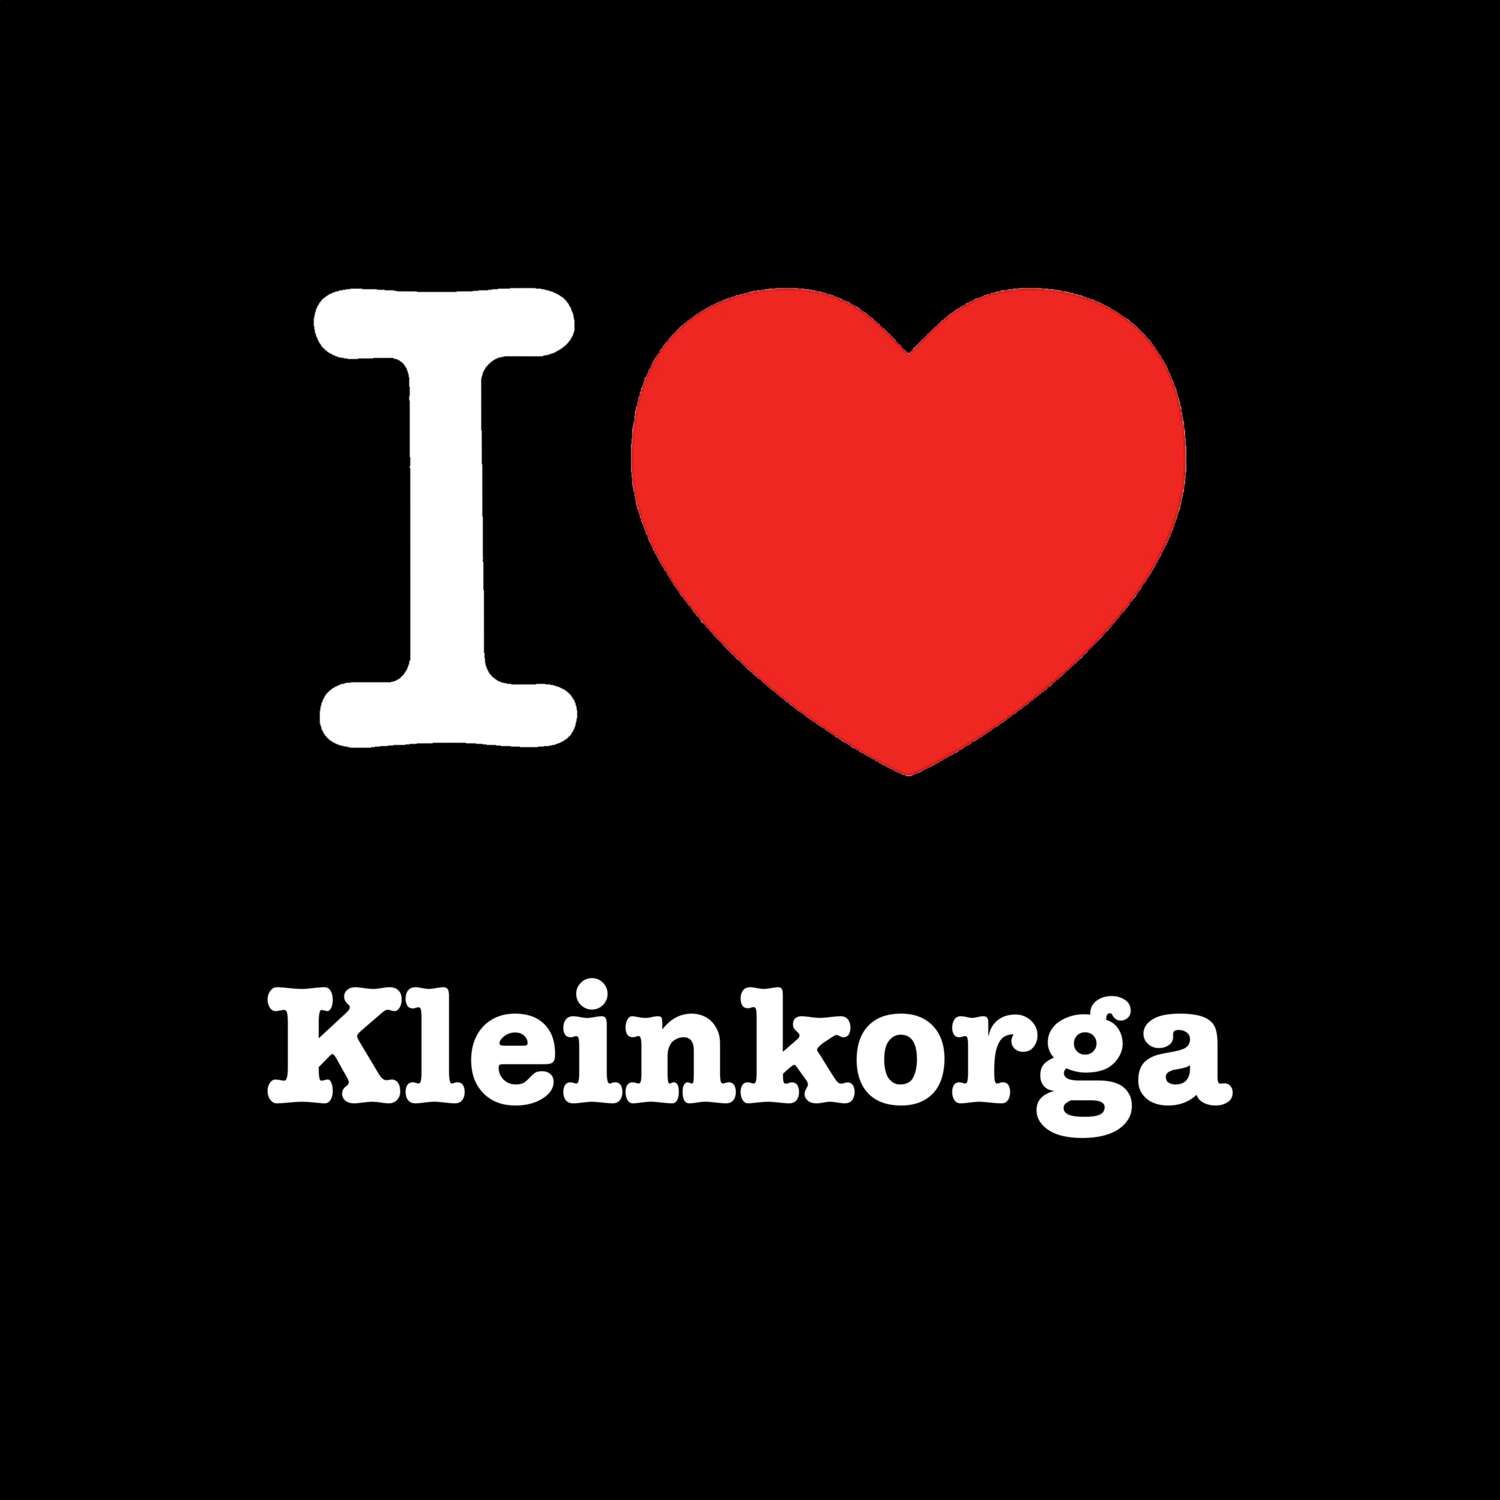 Kleinkorga T-Shirt »I love«